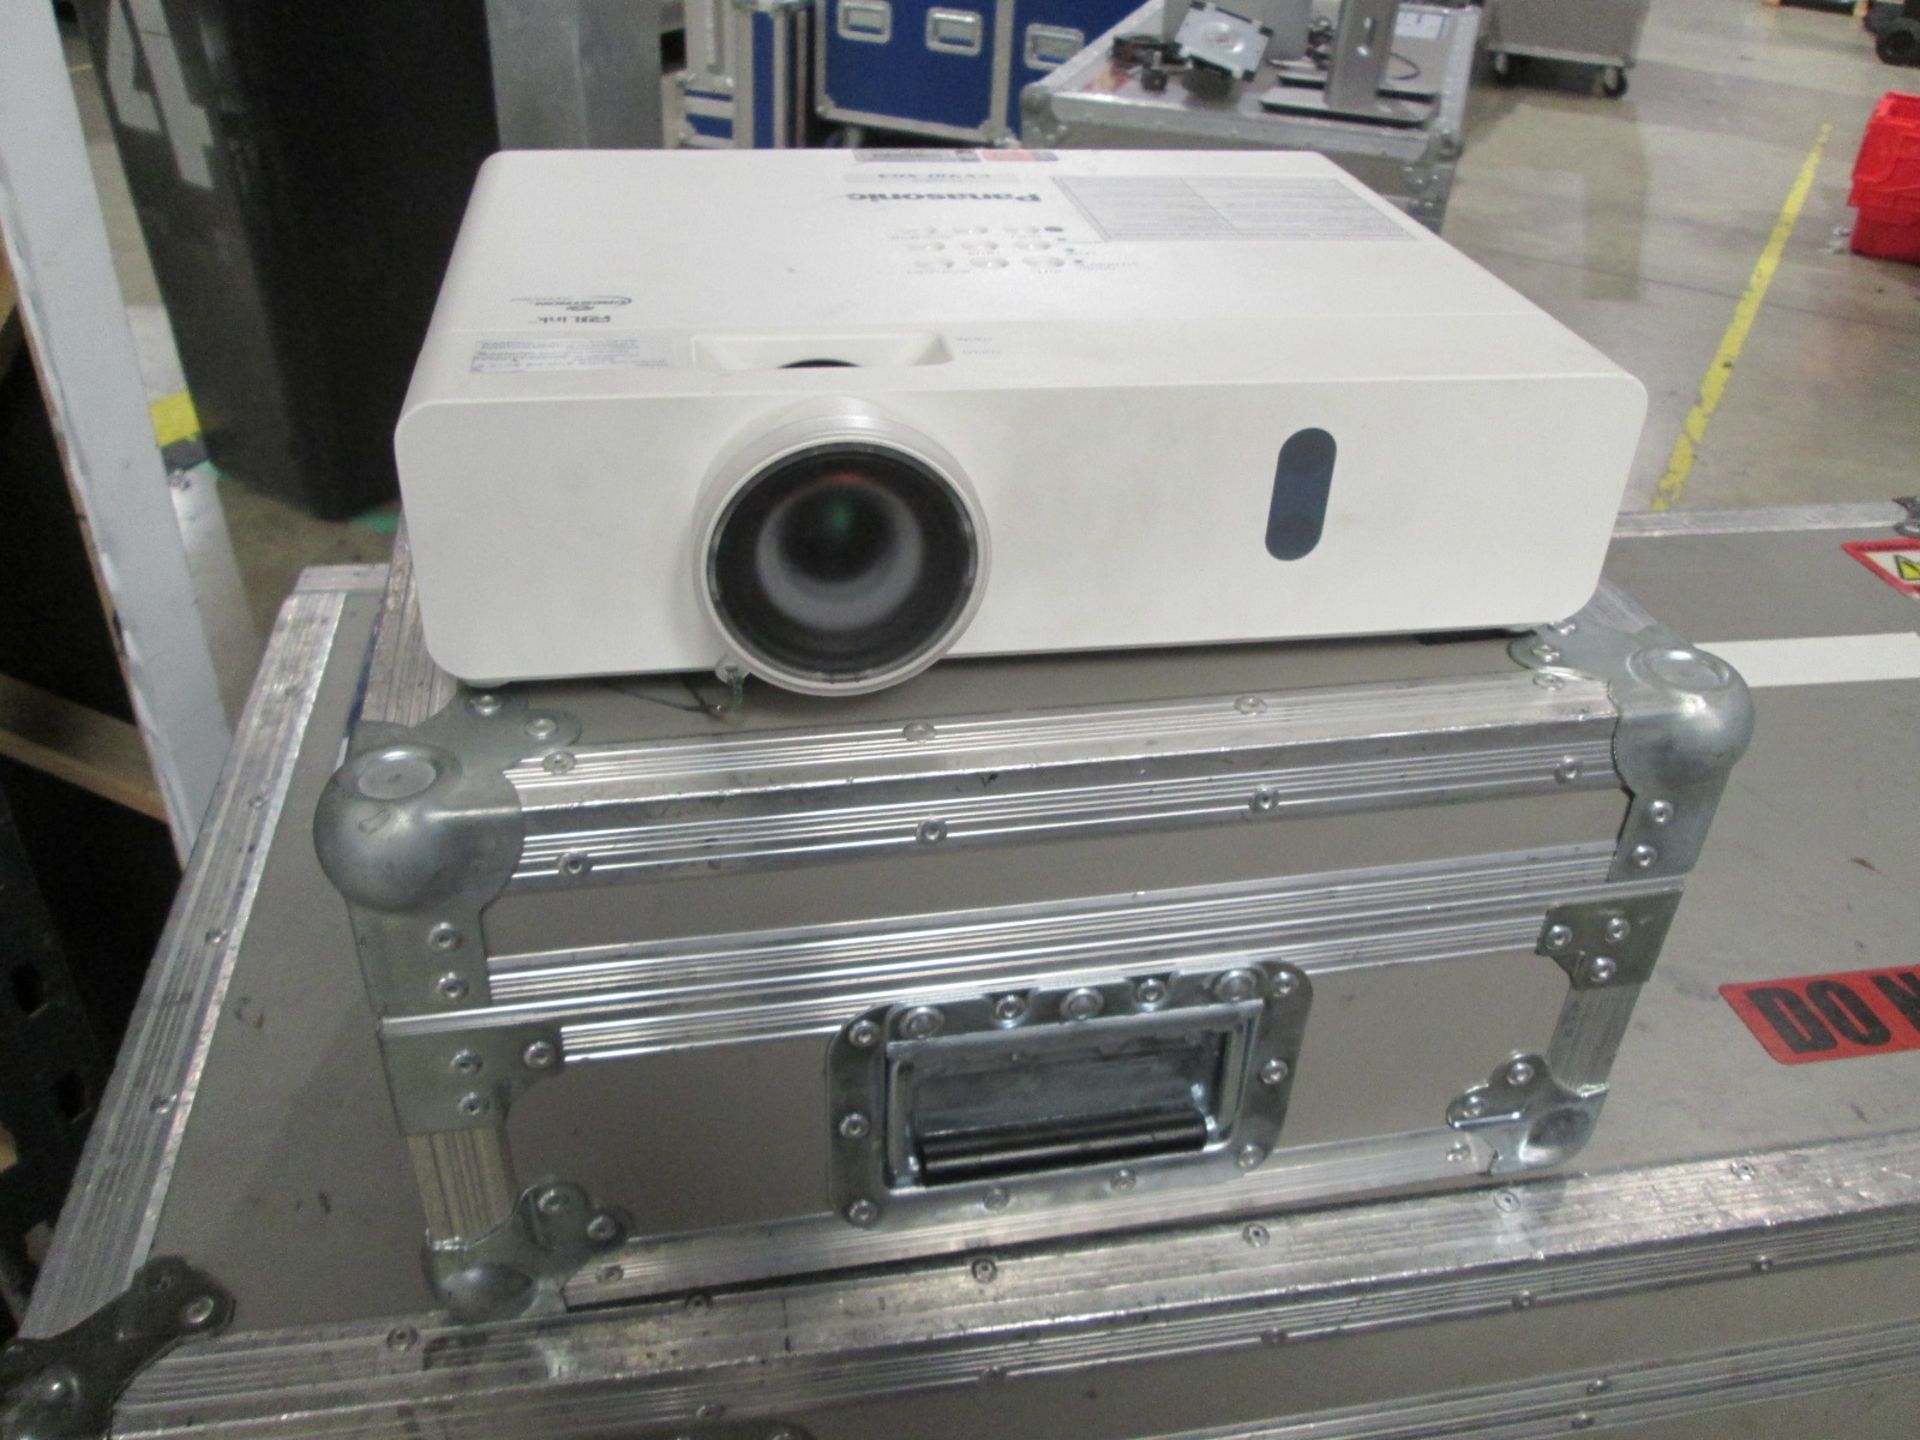 Panasonic PT-VX410Z LCD Projector, S/N DC4640030, YOM 2014, In flight case